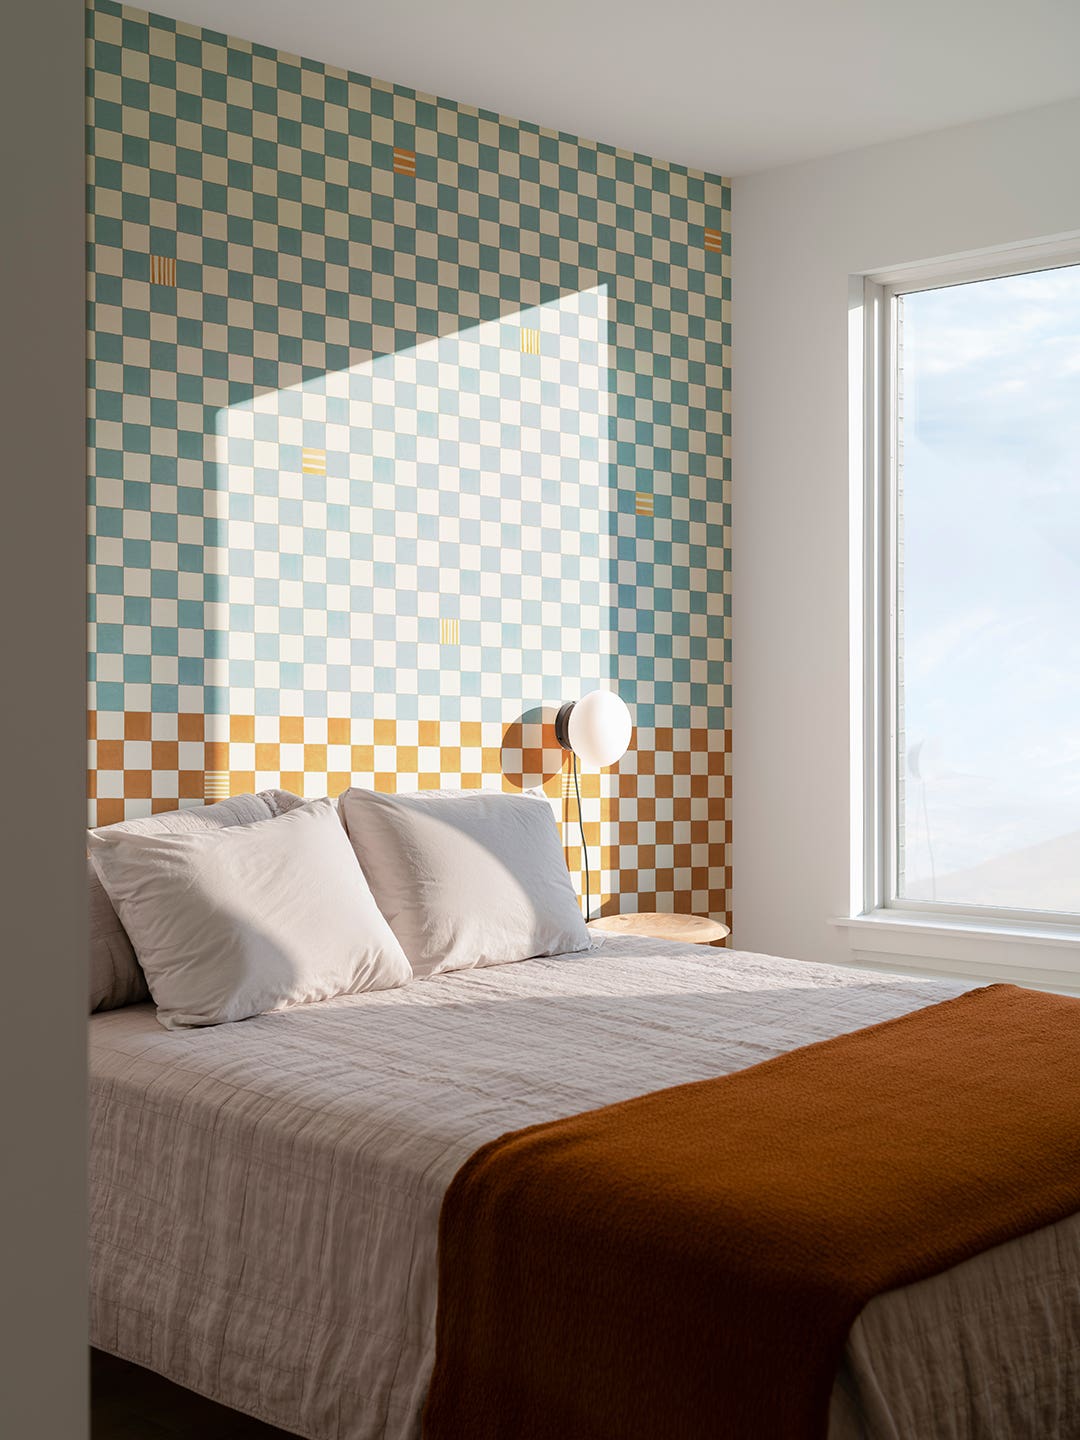 checkered bedroom wallpaper